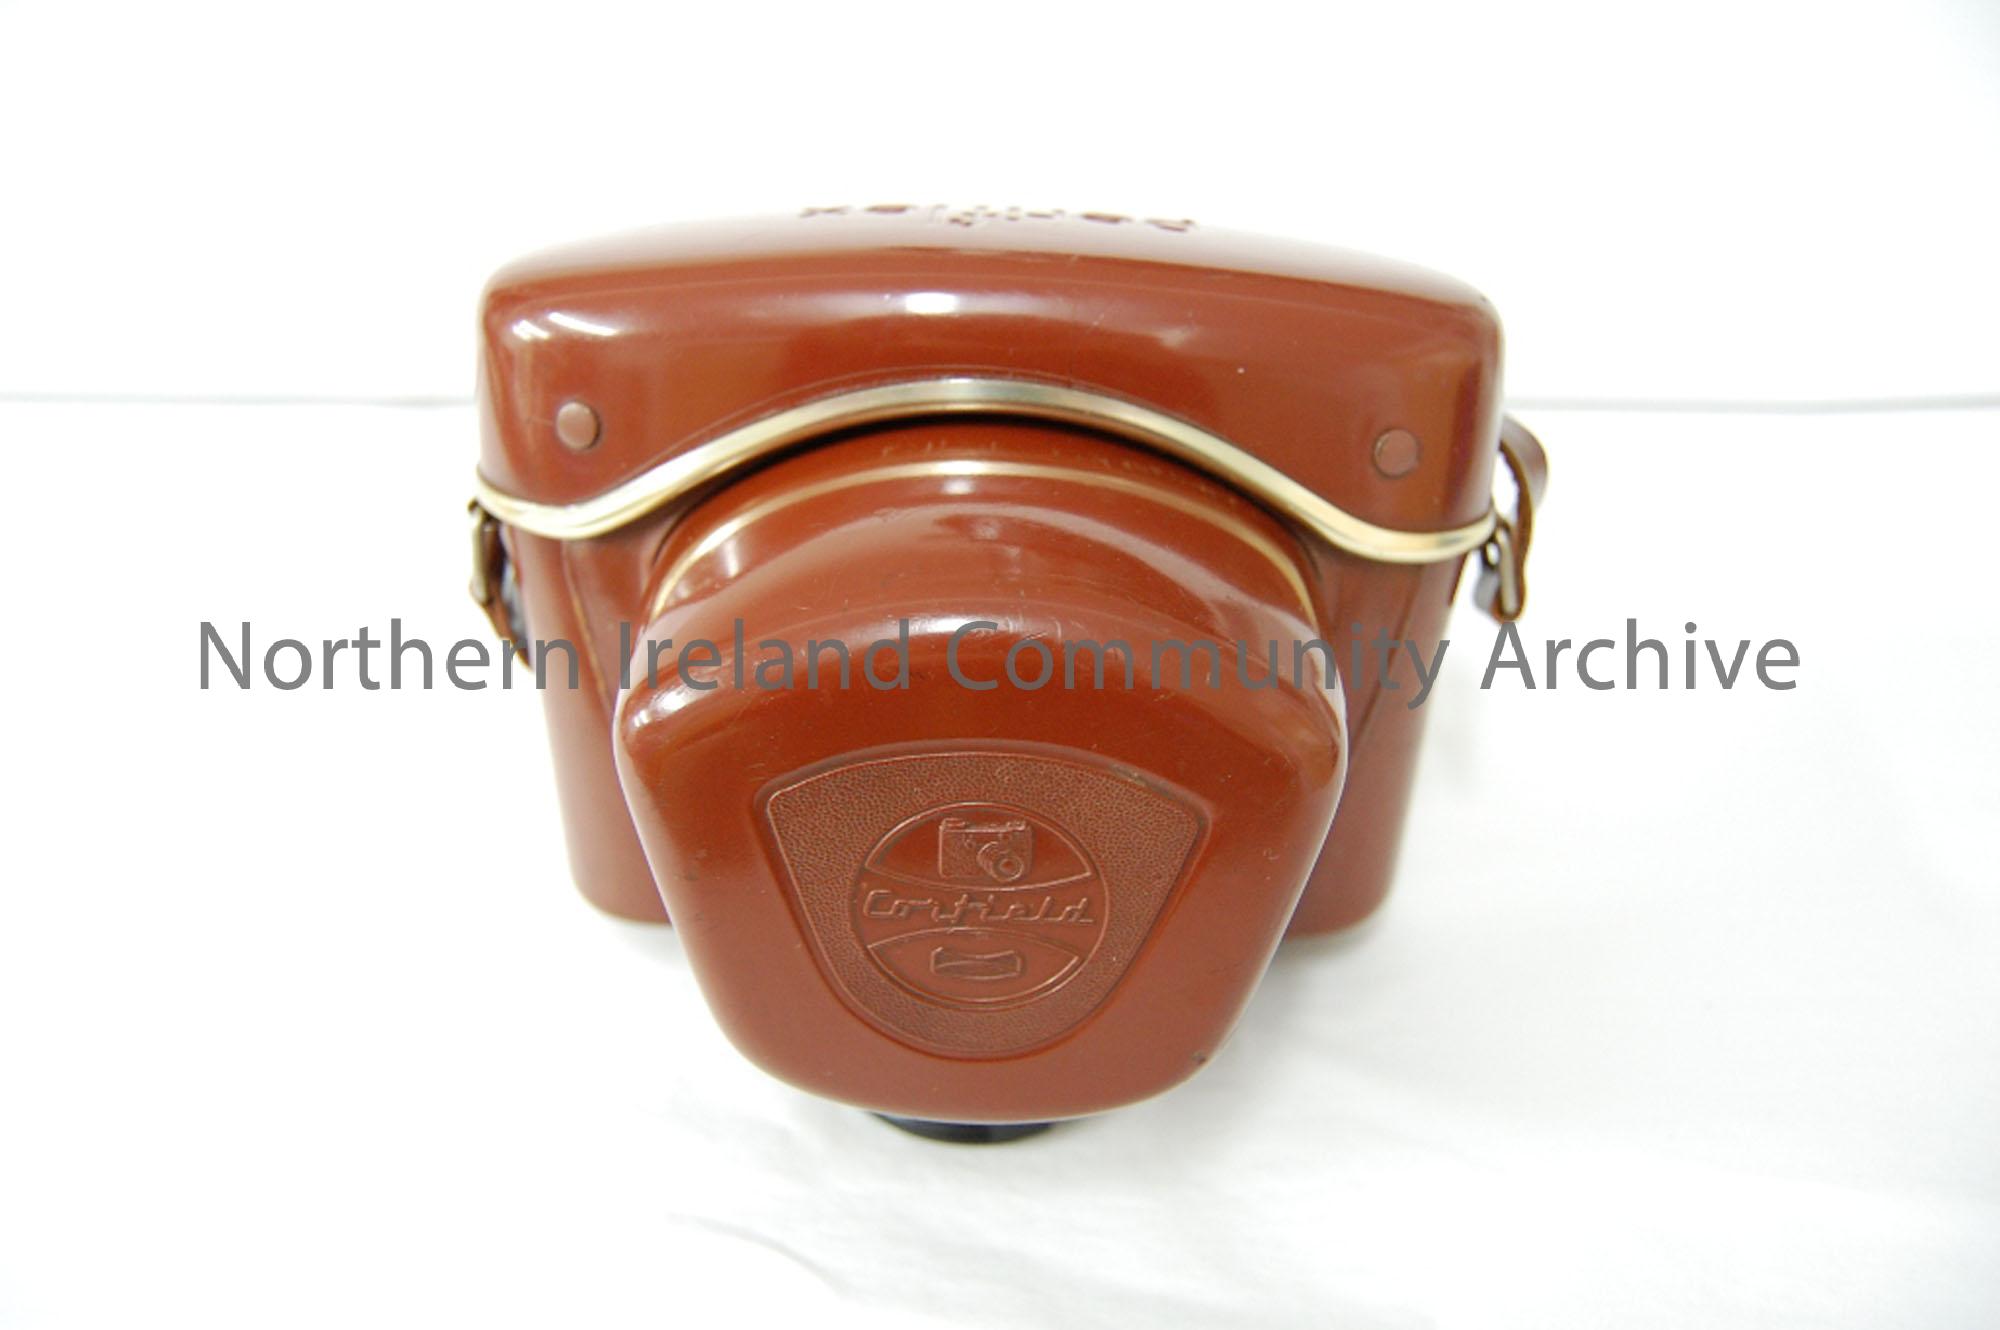 Corfield Periflex camera case with leather adjustable strap